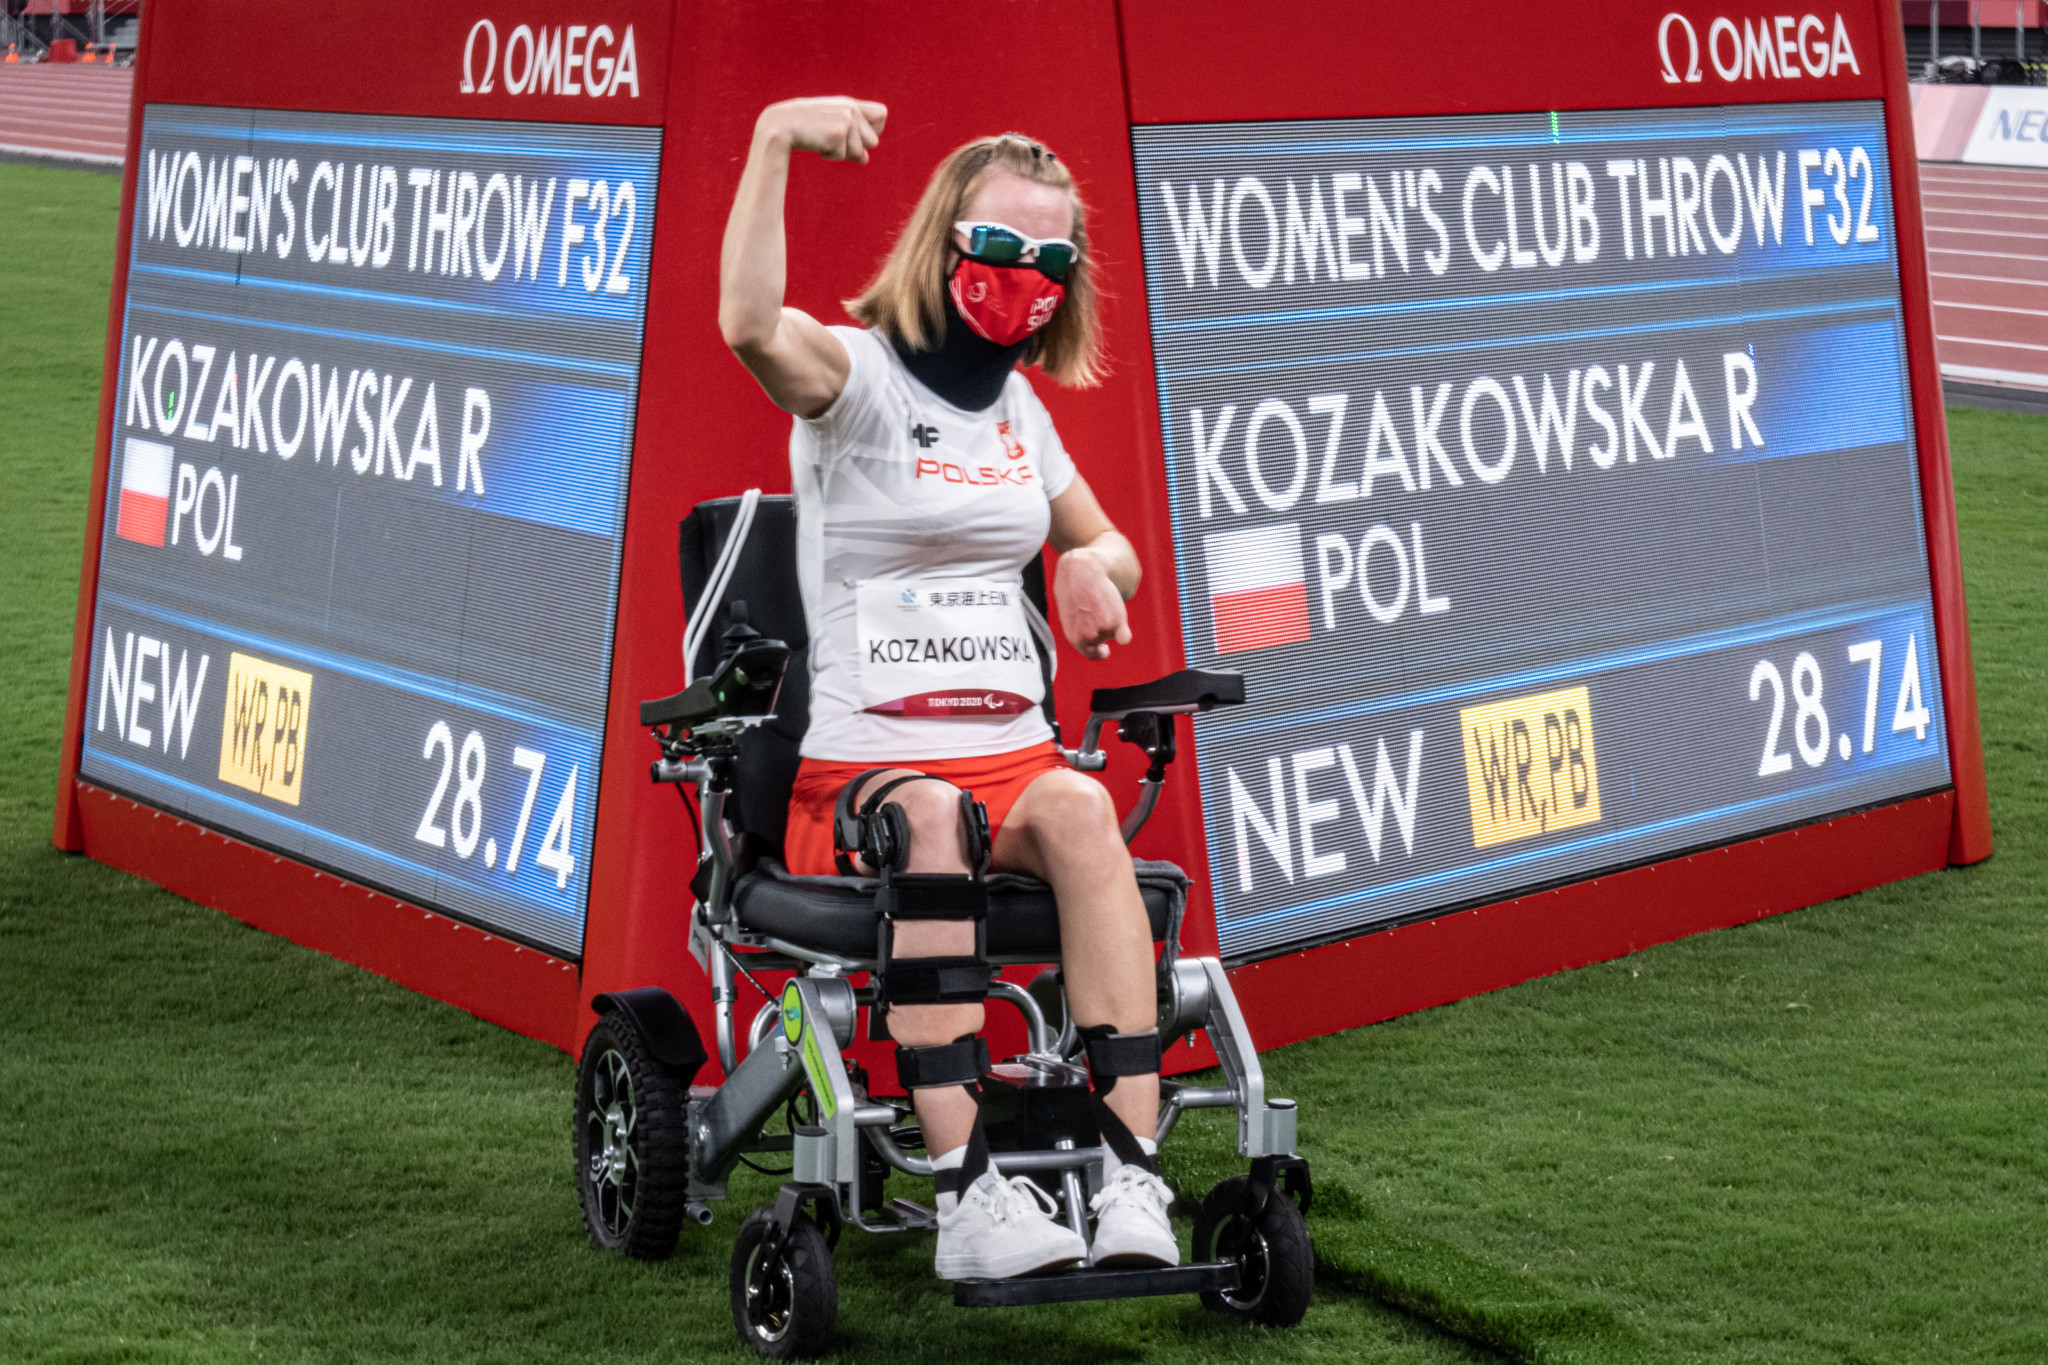 Róża Kozakowska set a new world record in the women's F32 club throw ©Getty Images